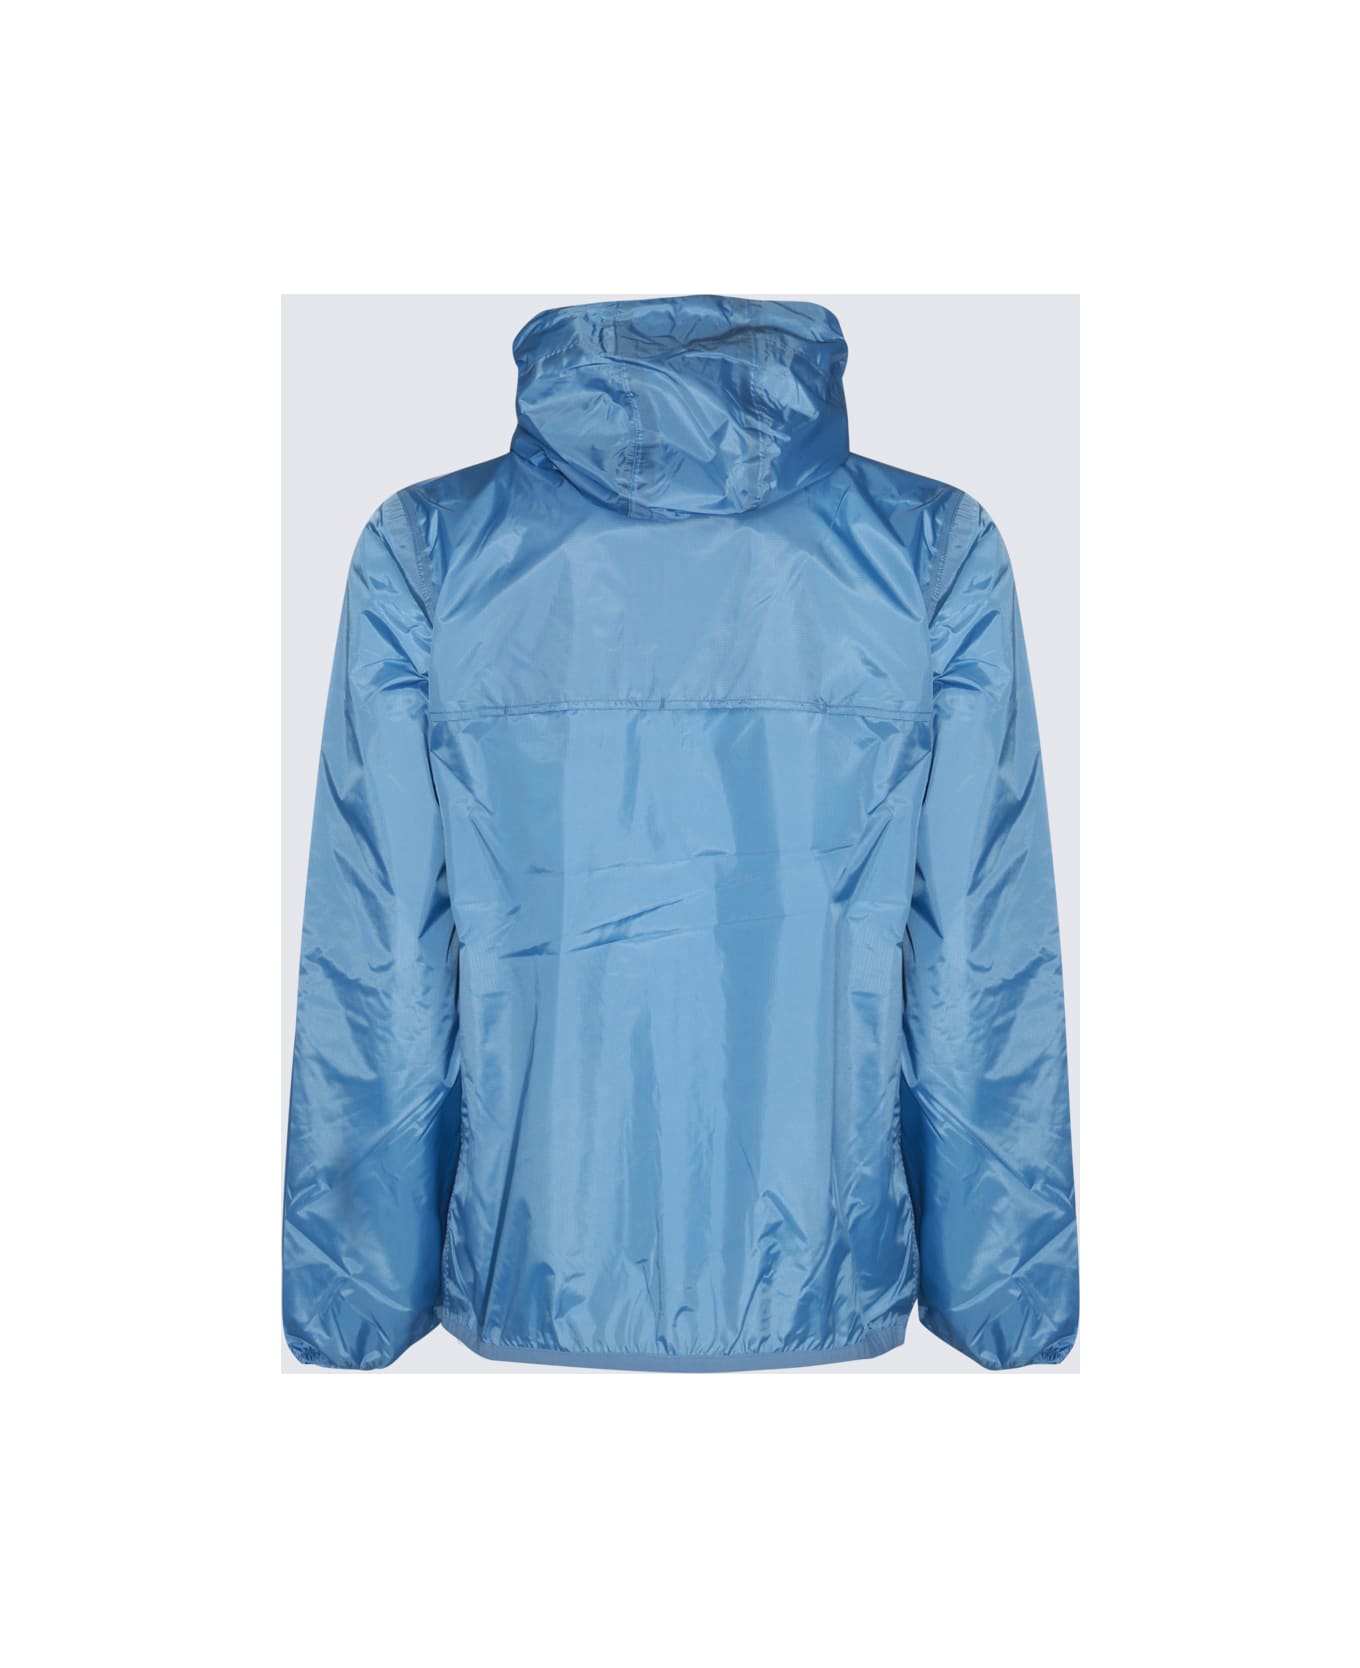 Maison Kitsuné Light Blue Casual Jacket - DRIFTER BLUE